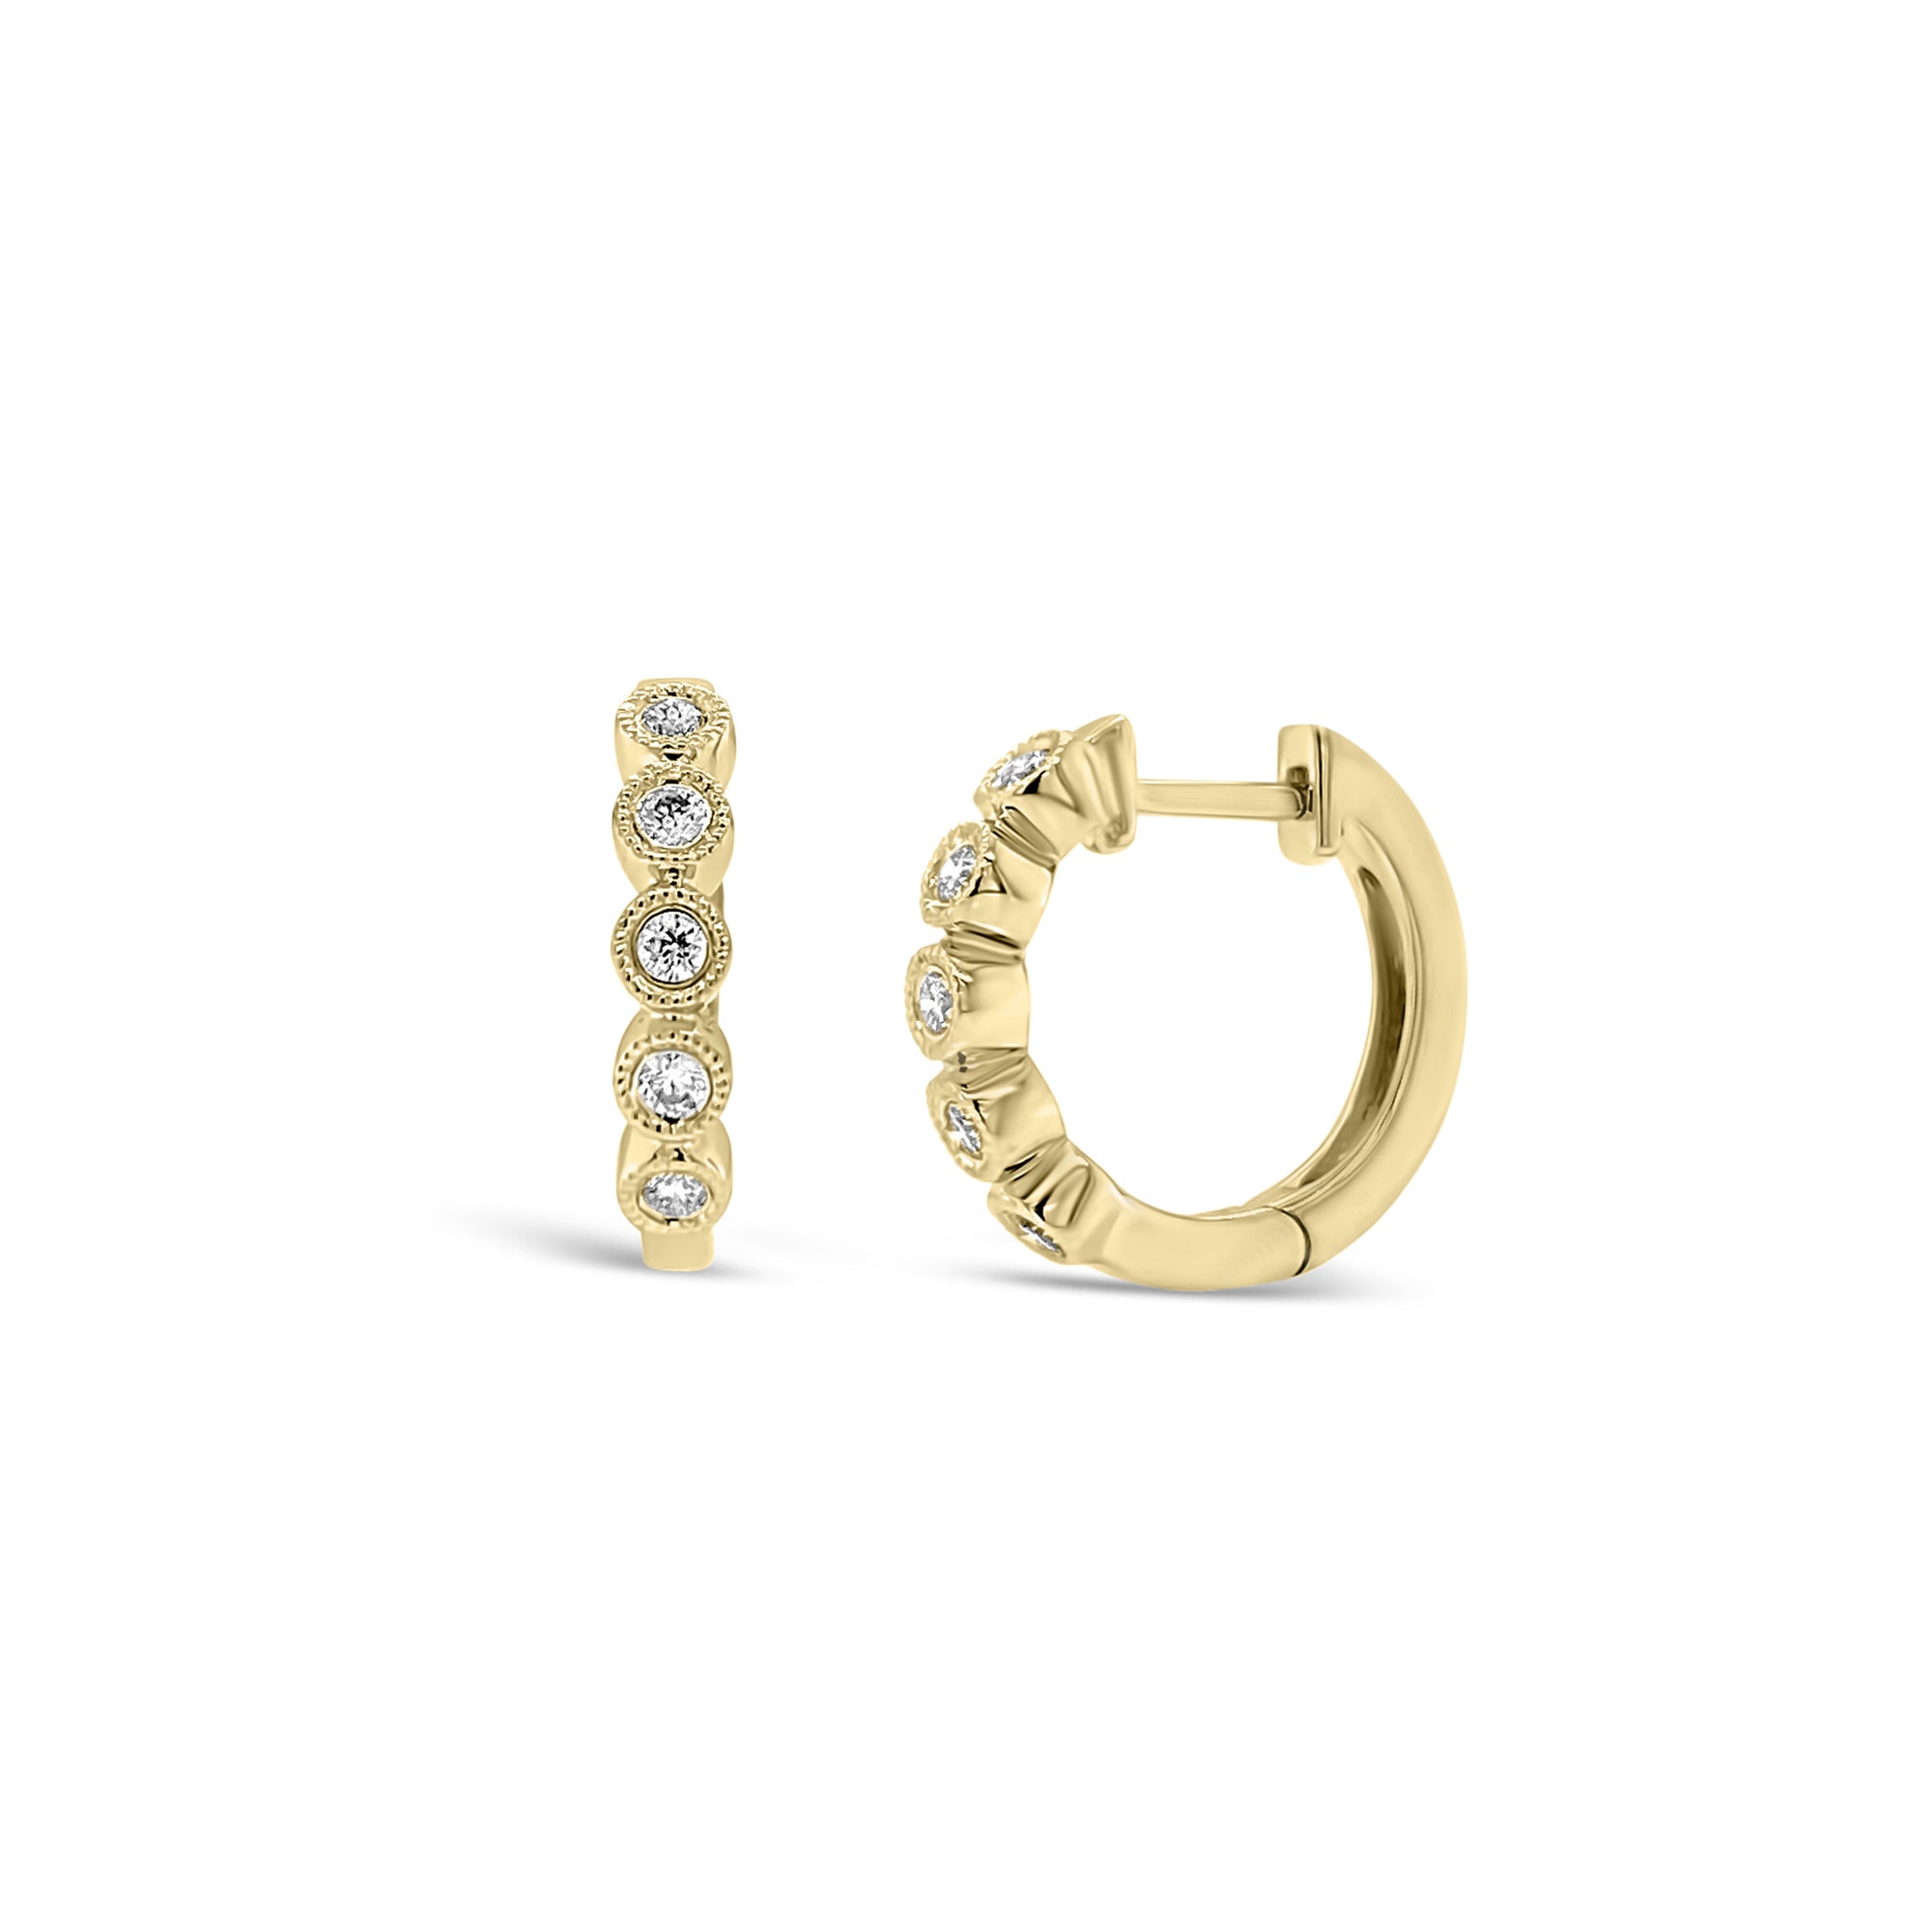 Diamond Huggie Earrings with Milgrain Detail - 14K white gold weighing 2.08 grams  - 10 round diamonds totaling 0.12 carats